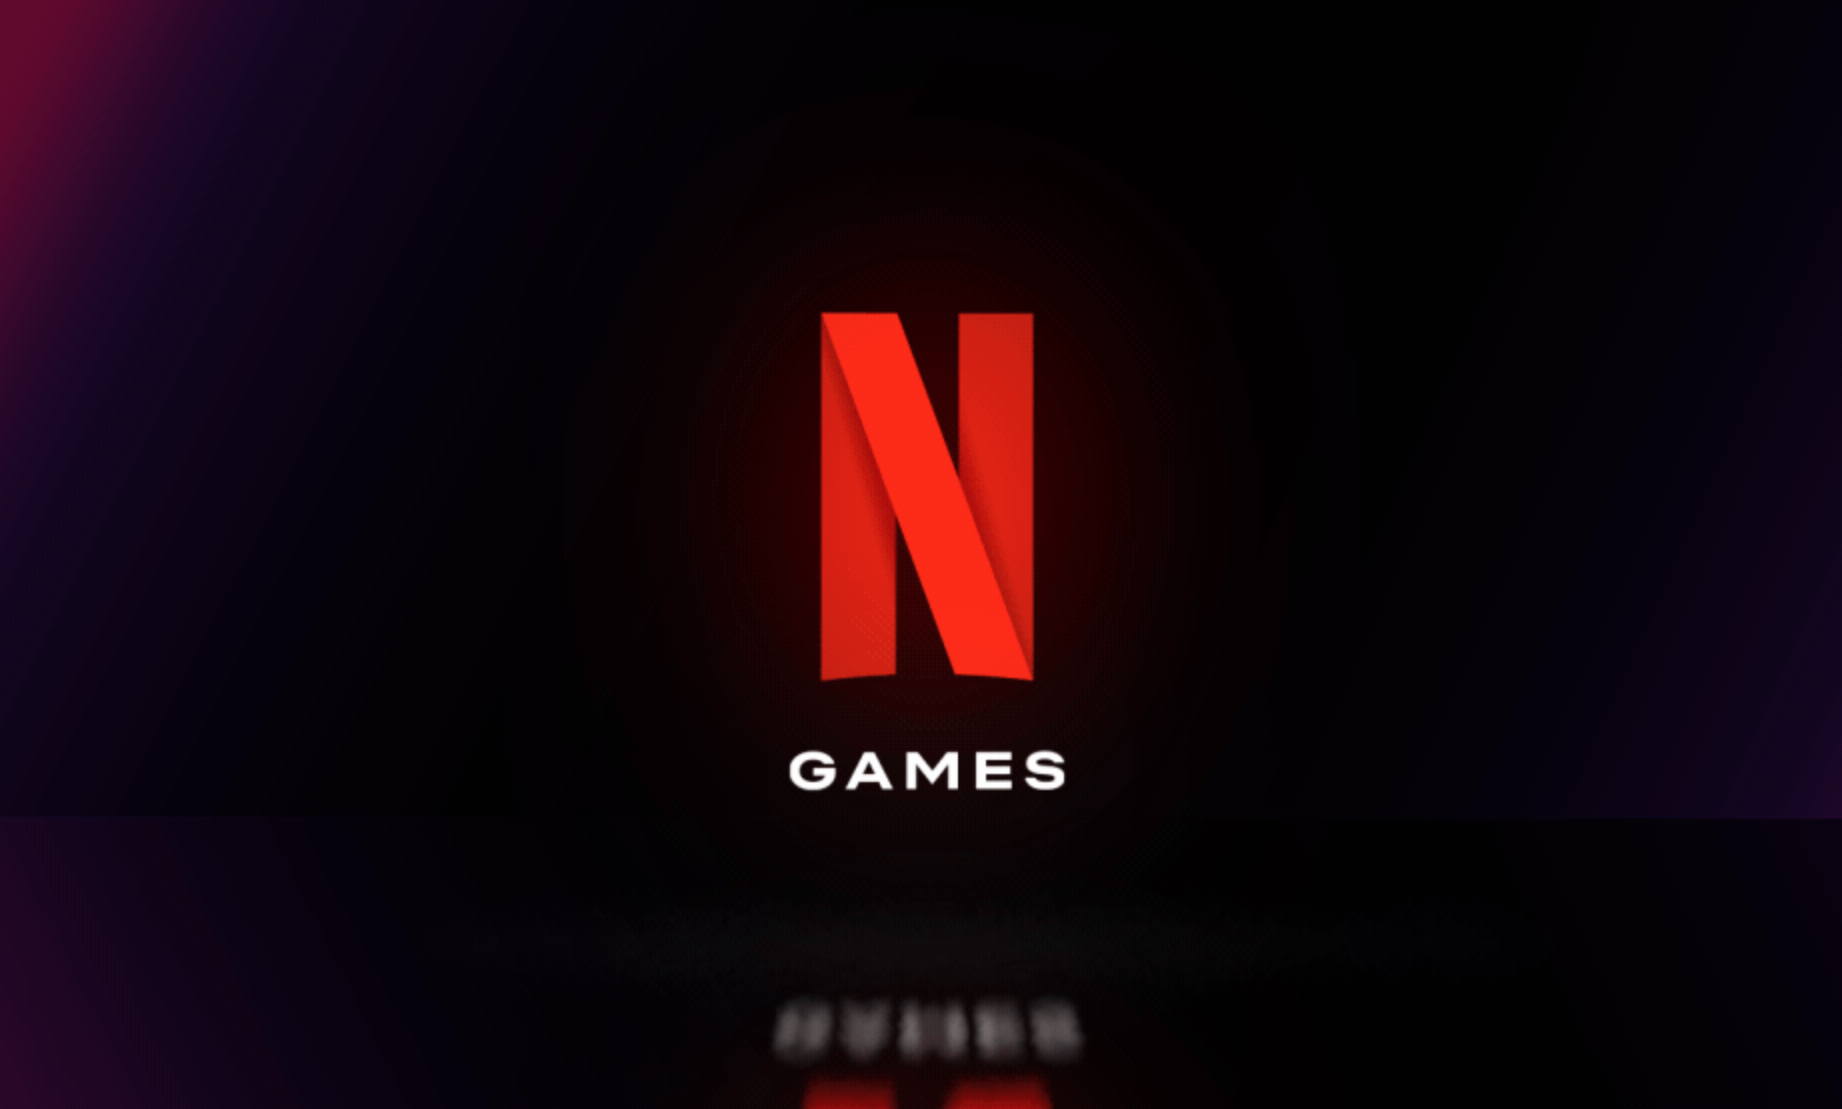 The Netflix Games logo, a red 